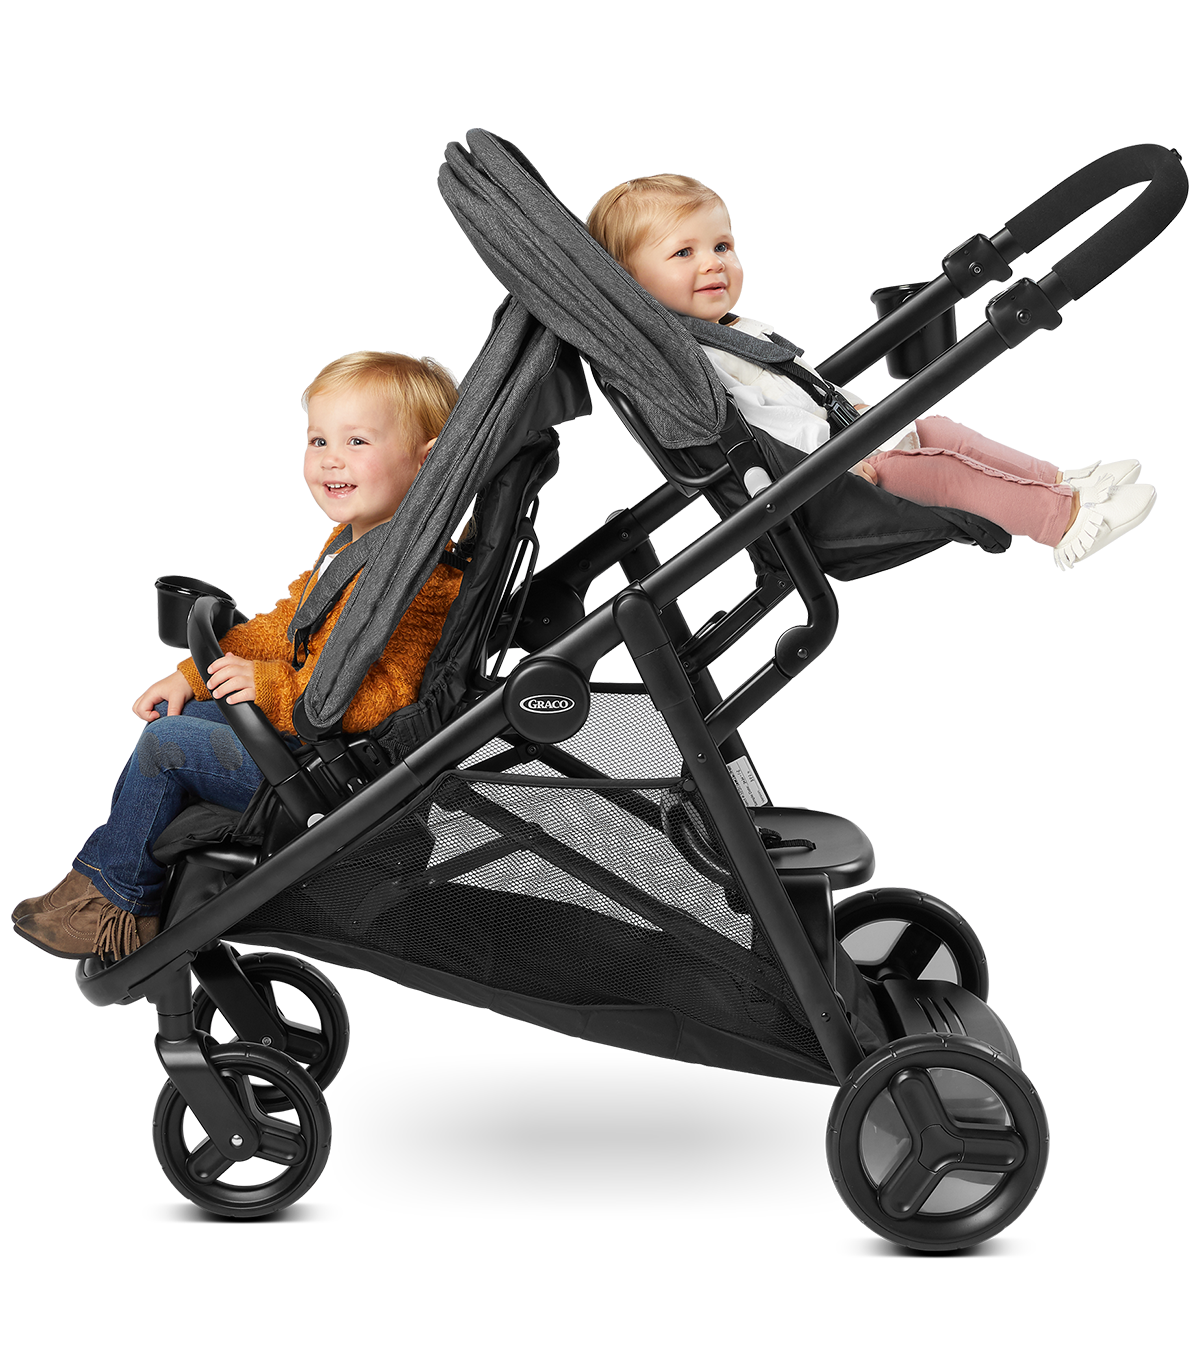 2 kids in dual stroller